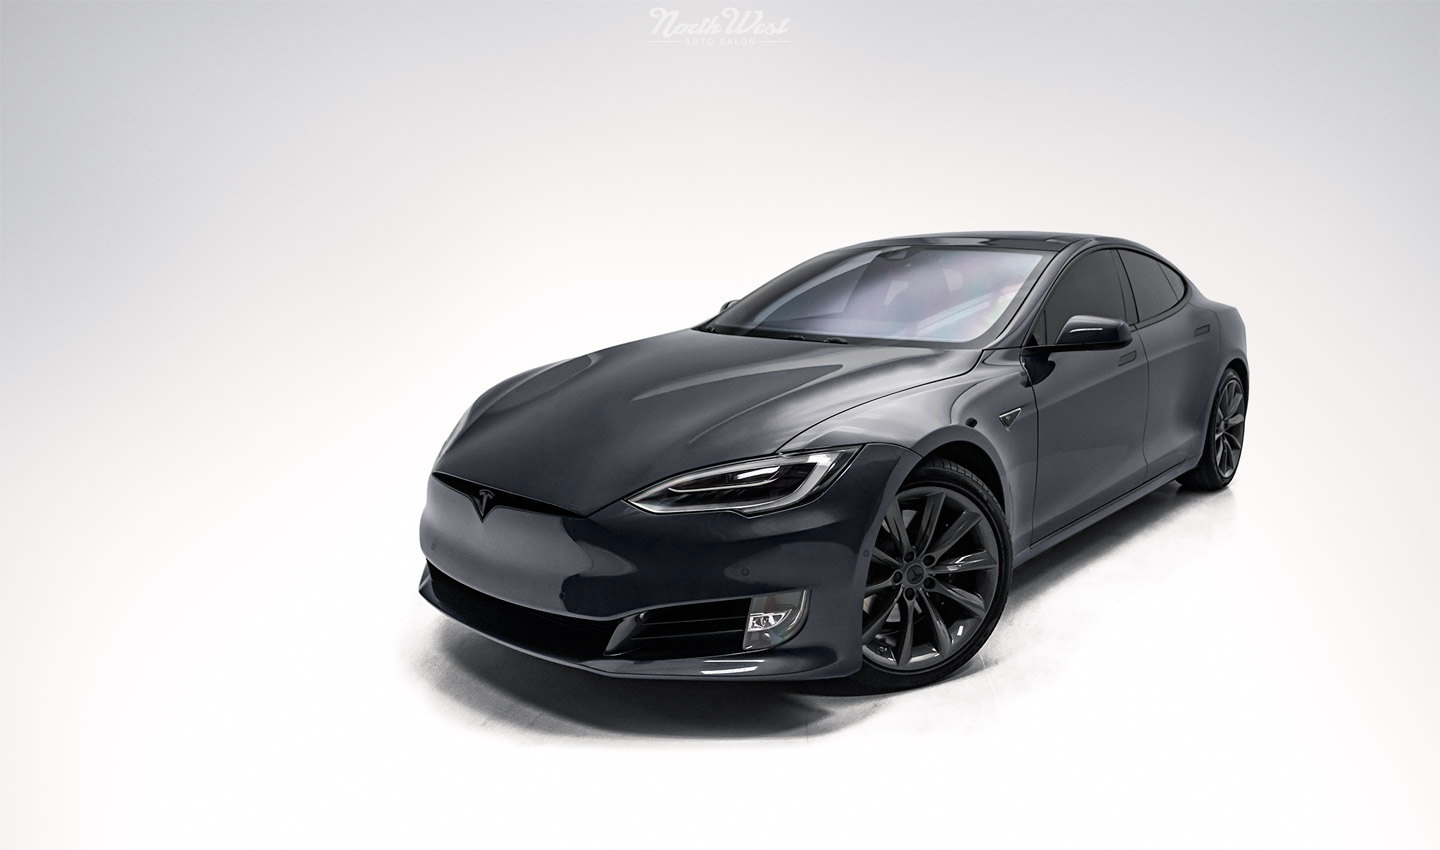 Tesla-Motors-Model-S-Facelifted-new-car-detail-xpel-chrome-delete-vinyl-wrap-front-qtr.jpg